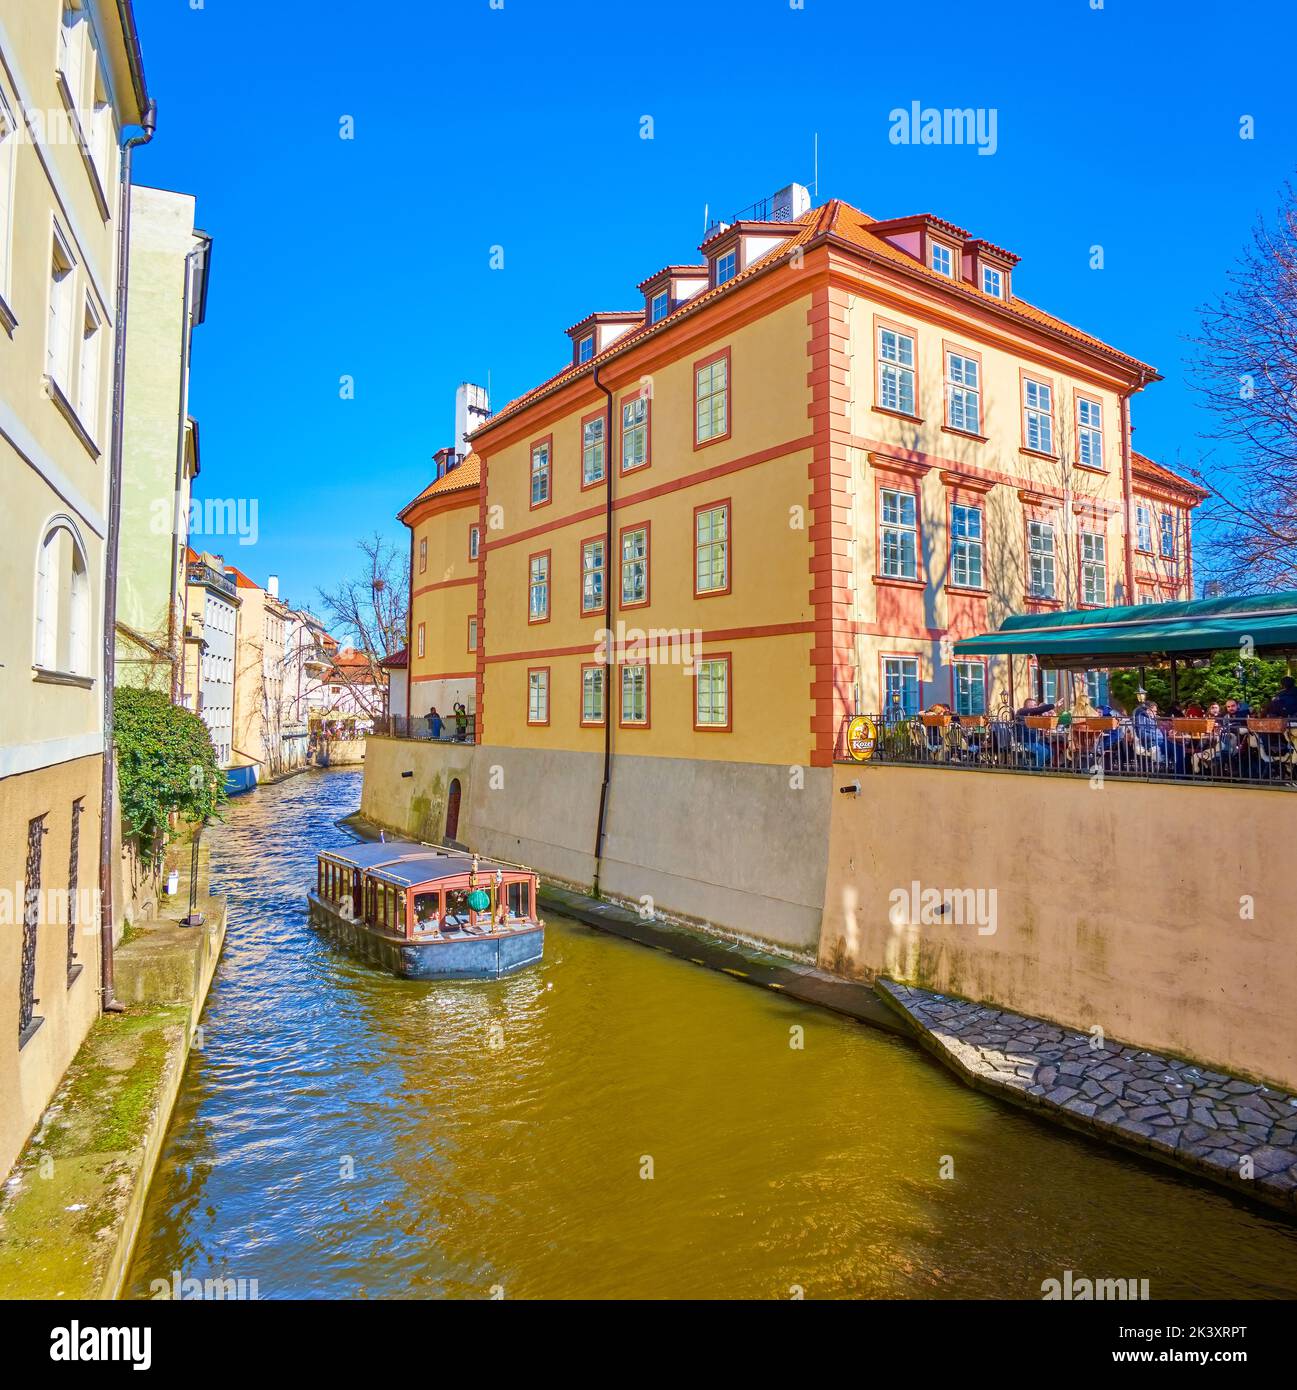 PRAGUE, CZECH REPUBLIC - MARCH 12, 2022: The tourist boat sails along Certovka Canal in Mala Strana district, on March 12 in Prague, Czech Republic Stock Photo